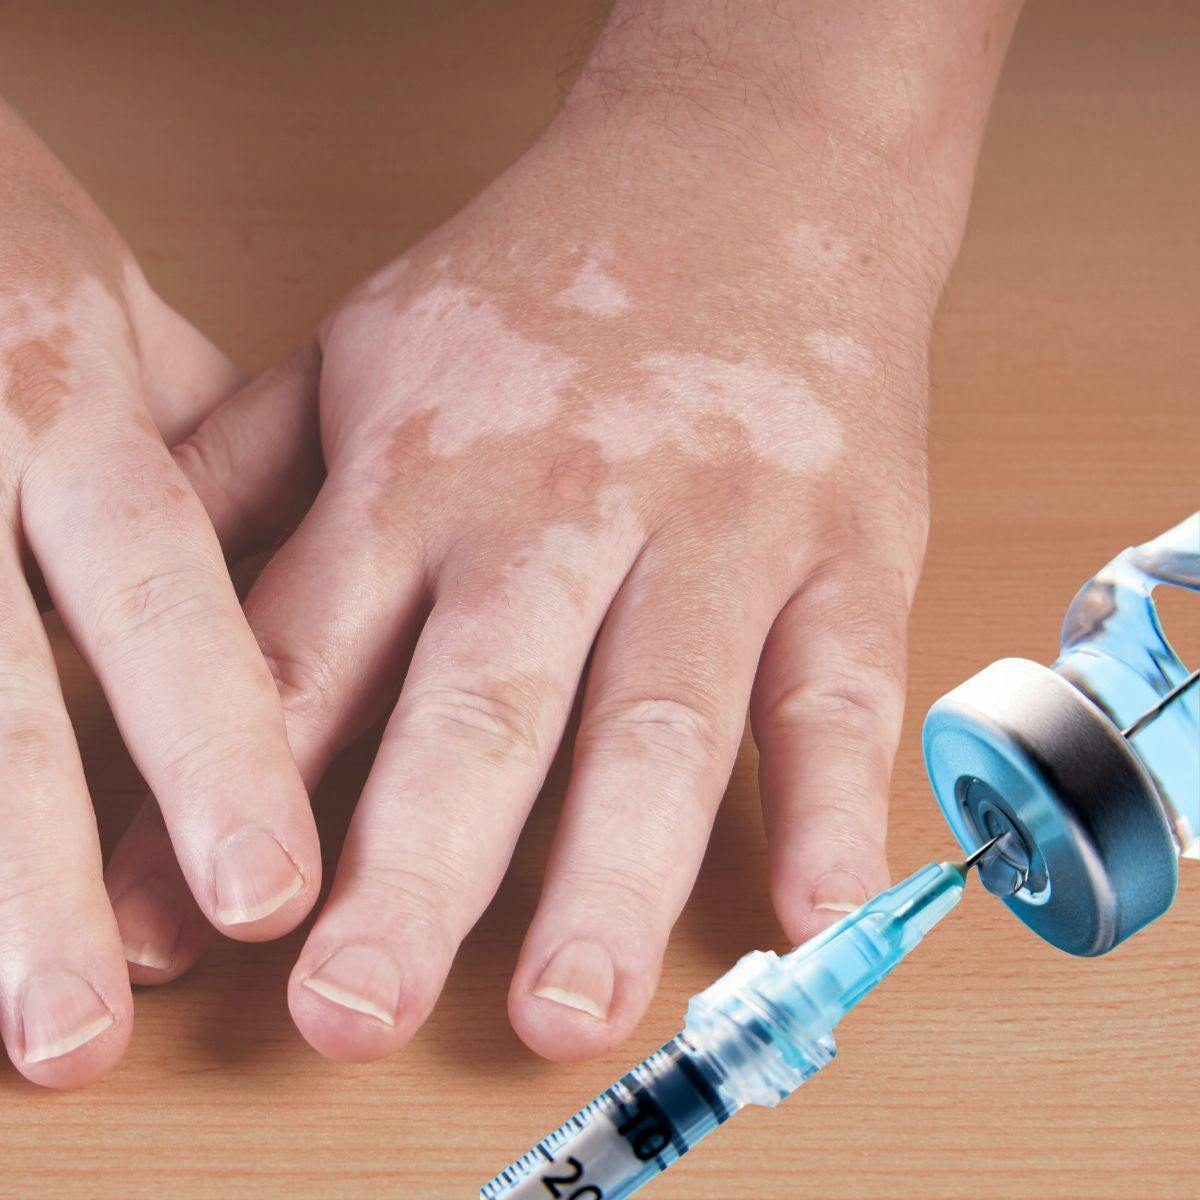 Case Study: Vitiligo Onset Following COVID-19 Vaccination